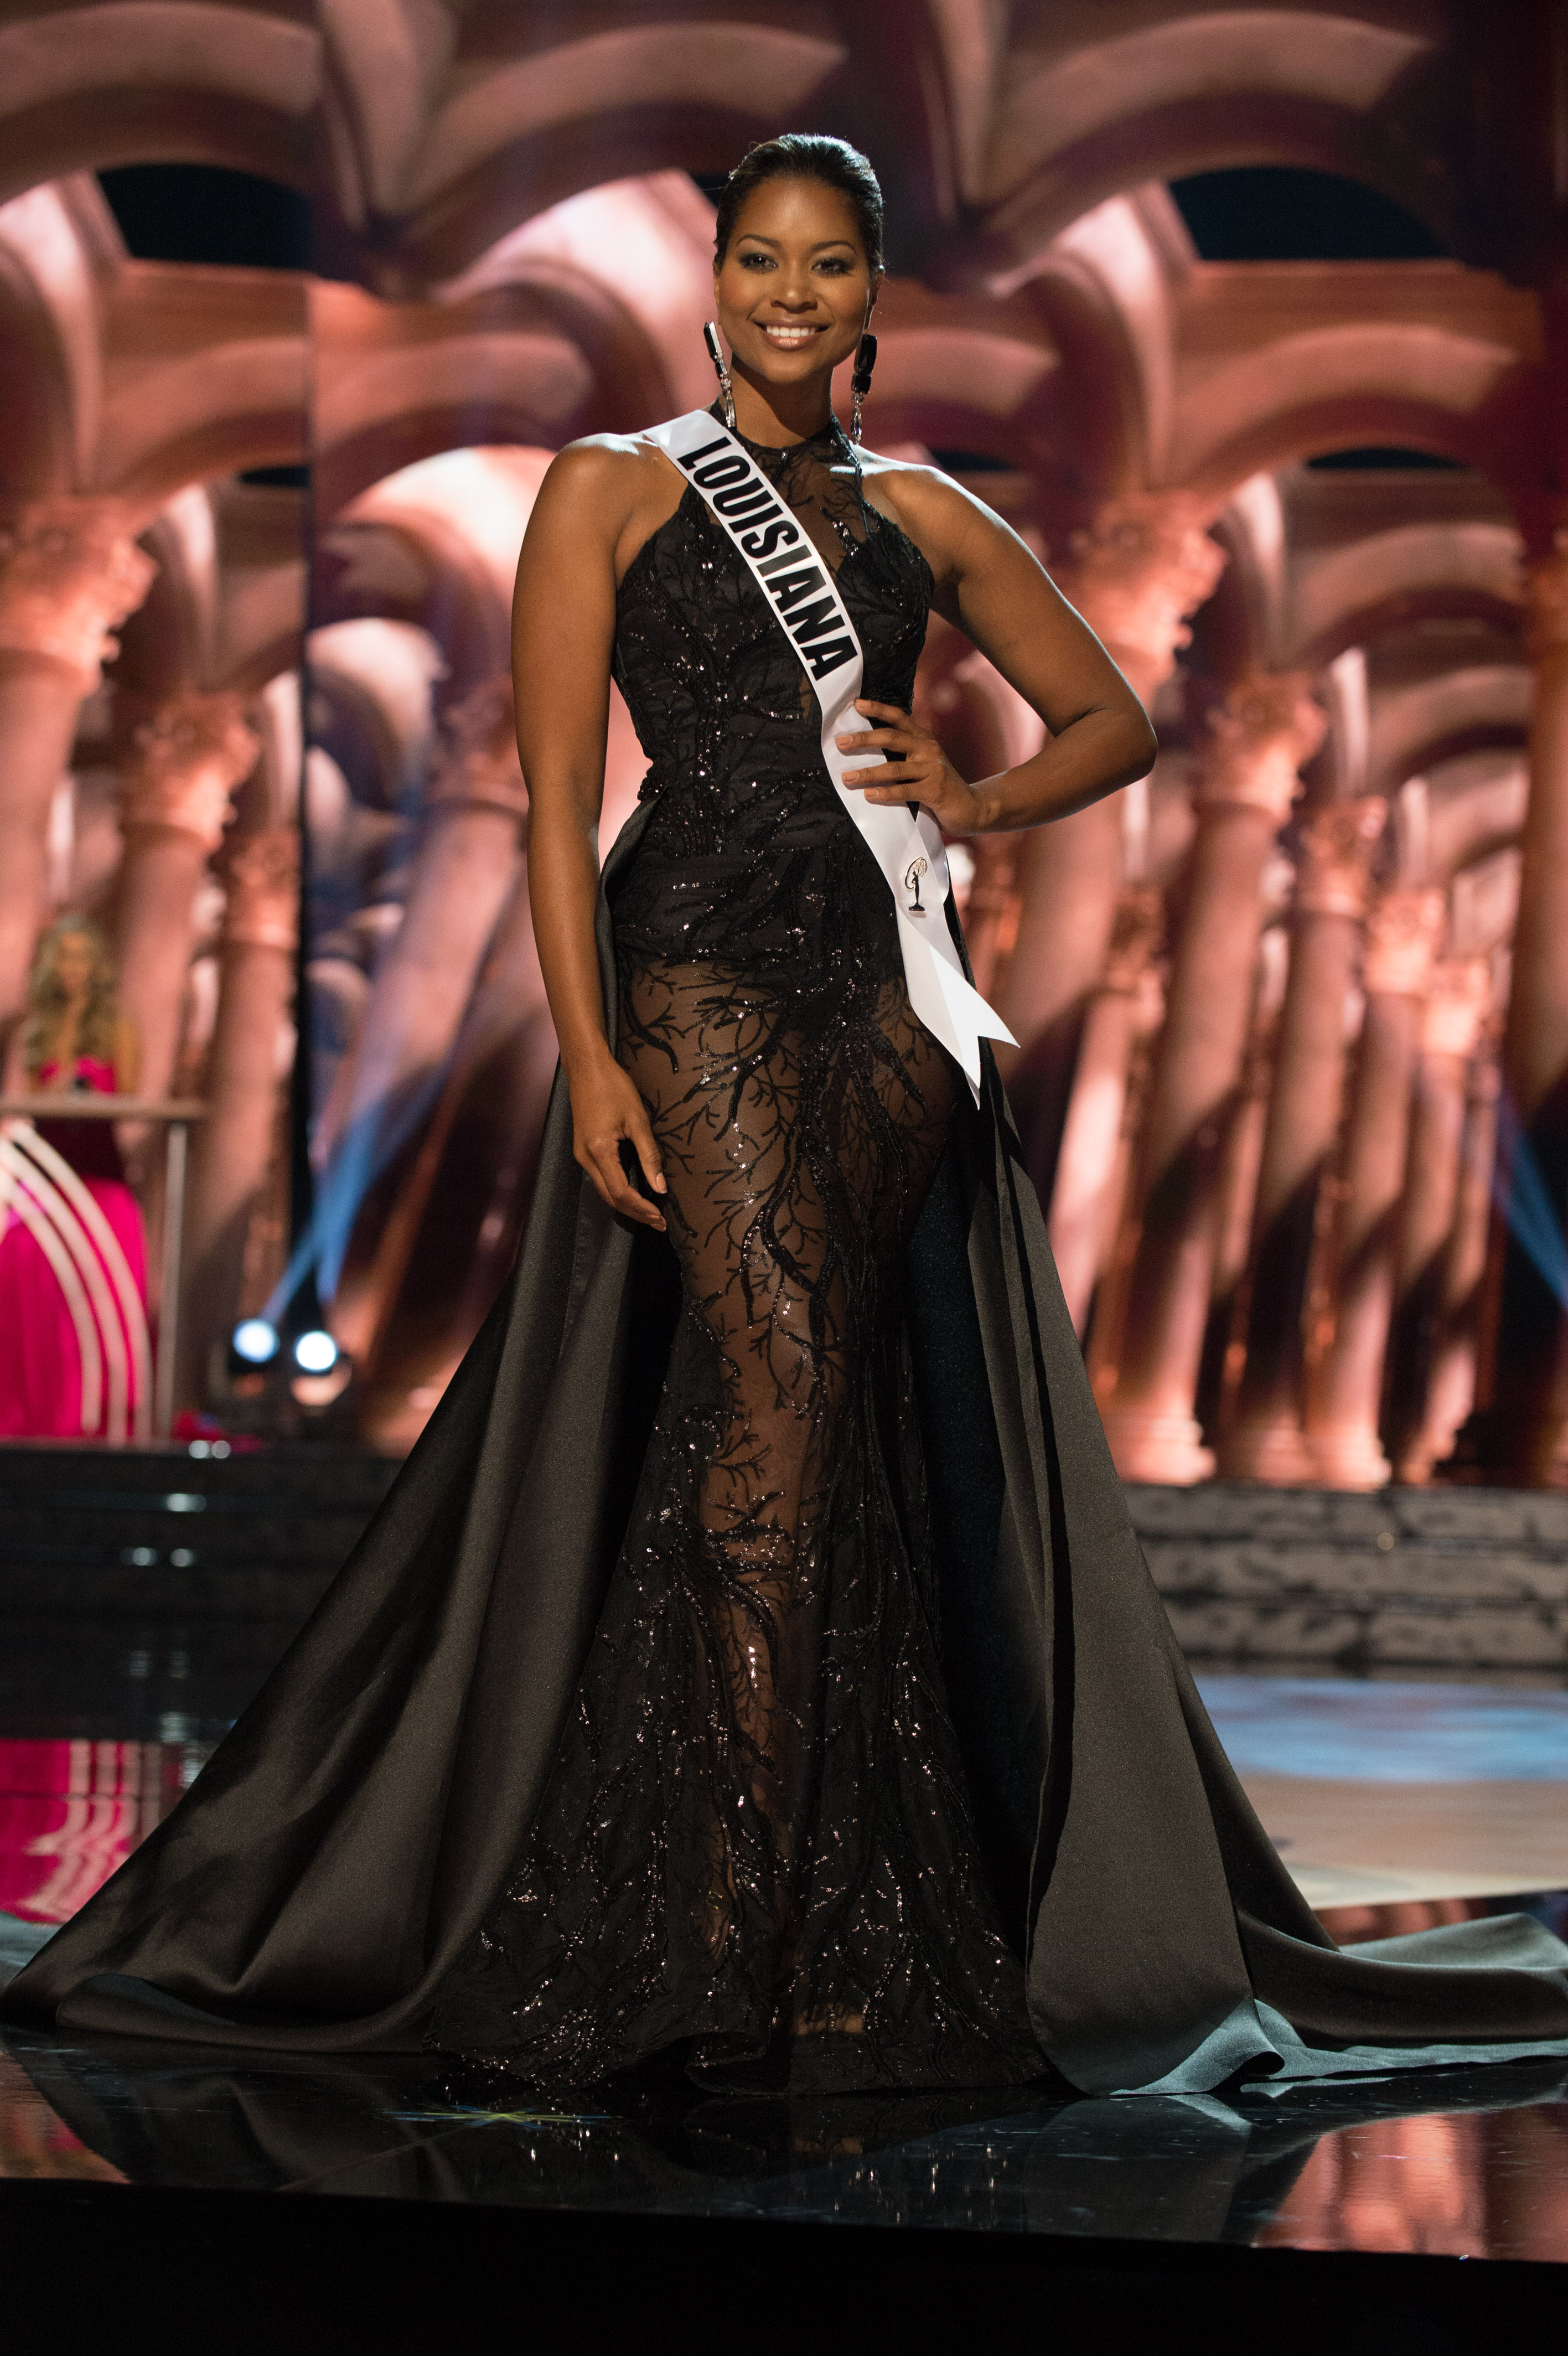 Miss Louisiana USA 2016, Maaliyah Papillion Competes For Miss USA